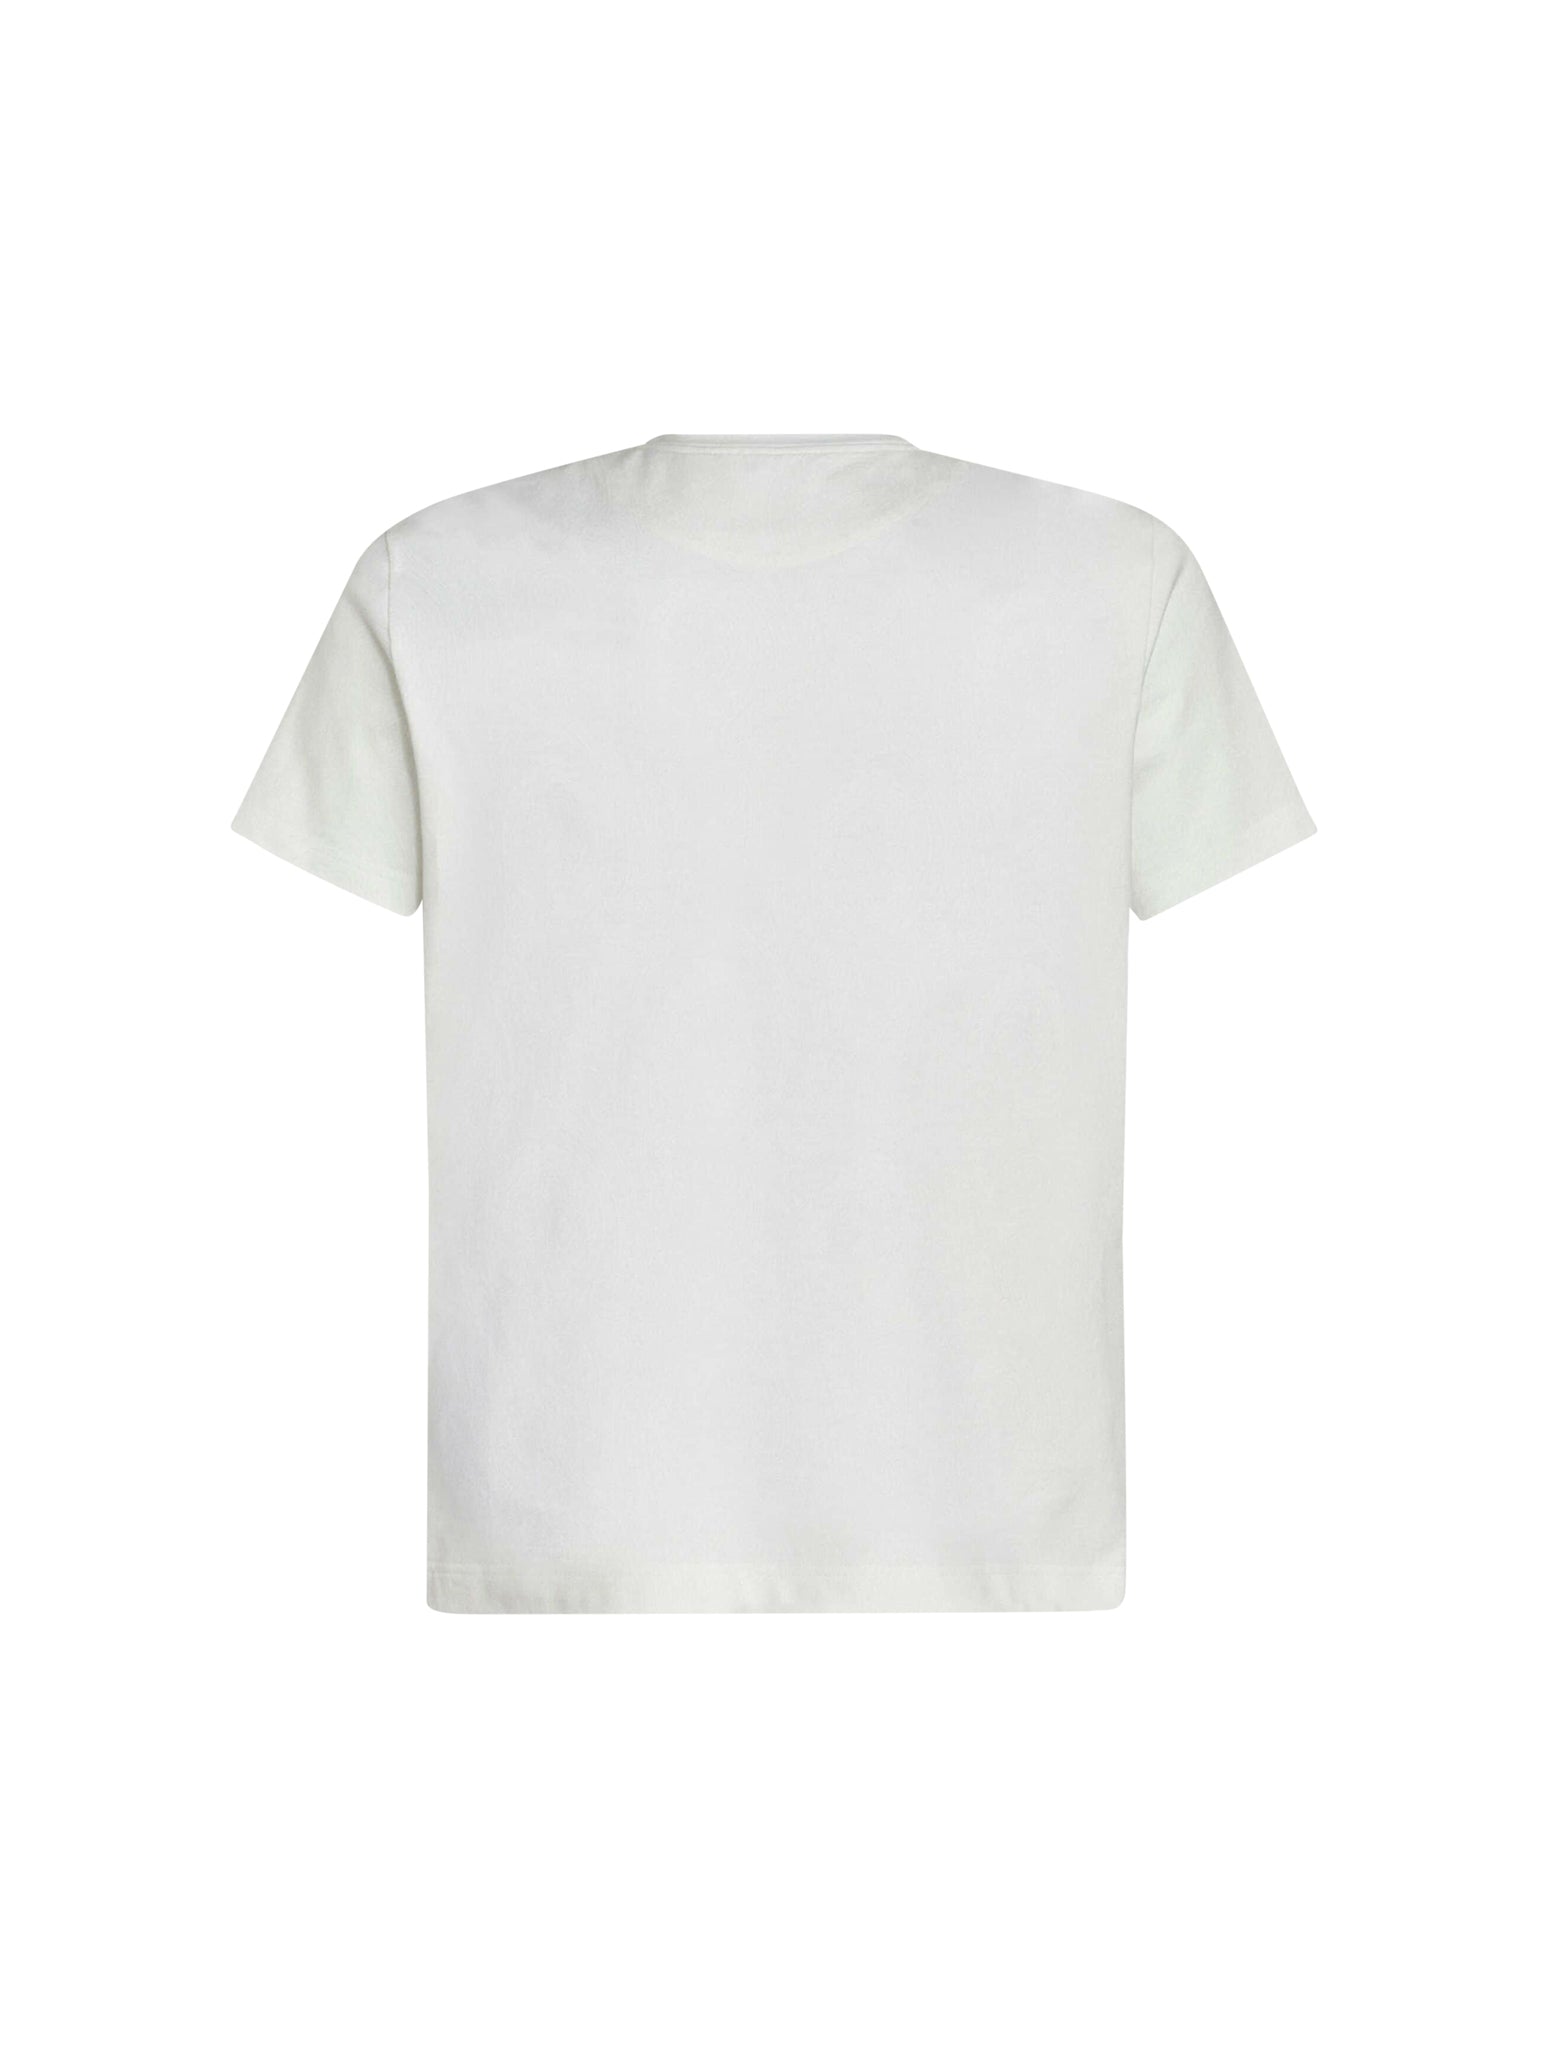 paisley-print cotton T-shirt